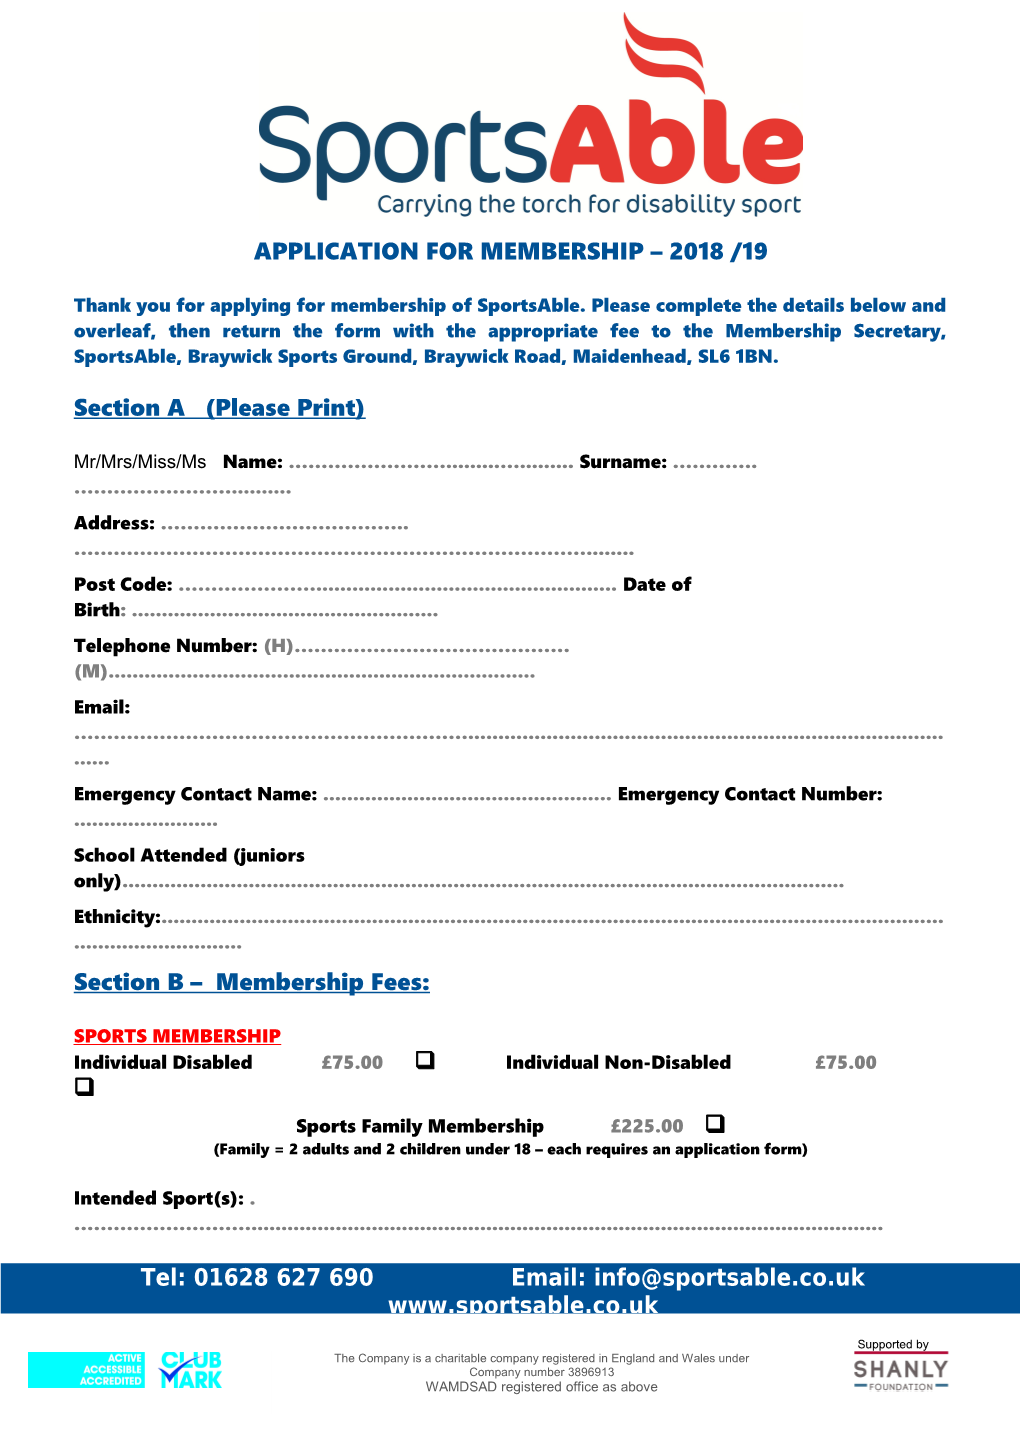 Application for Membership 2018/19